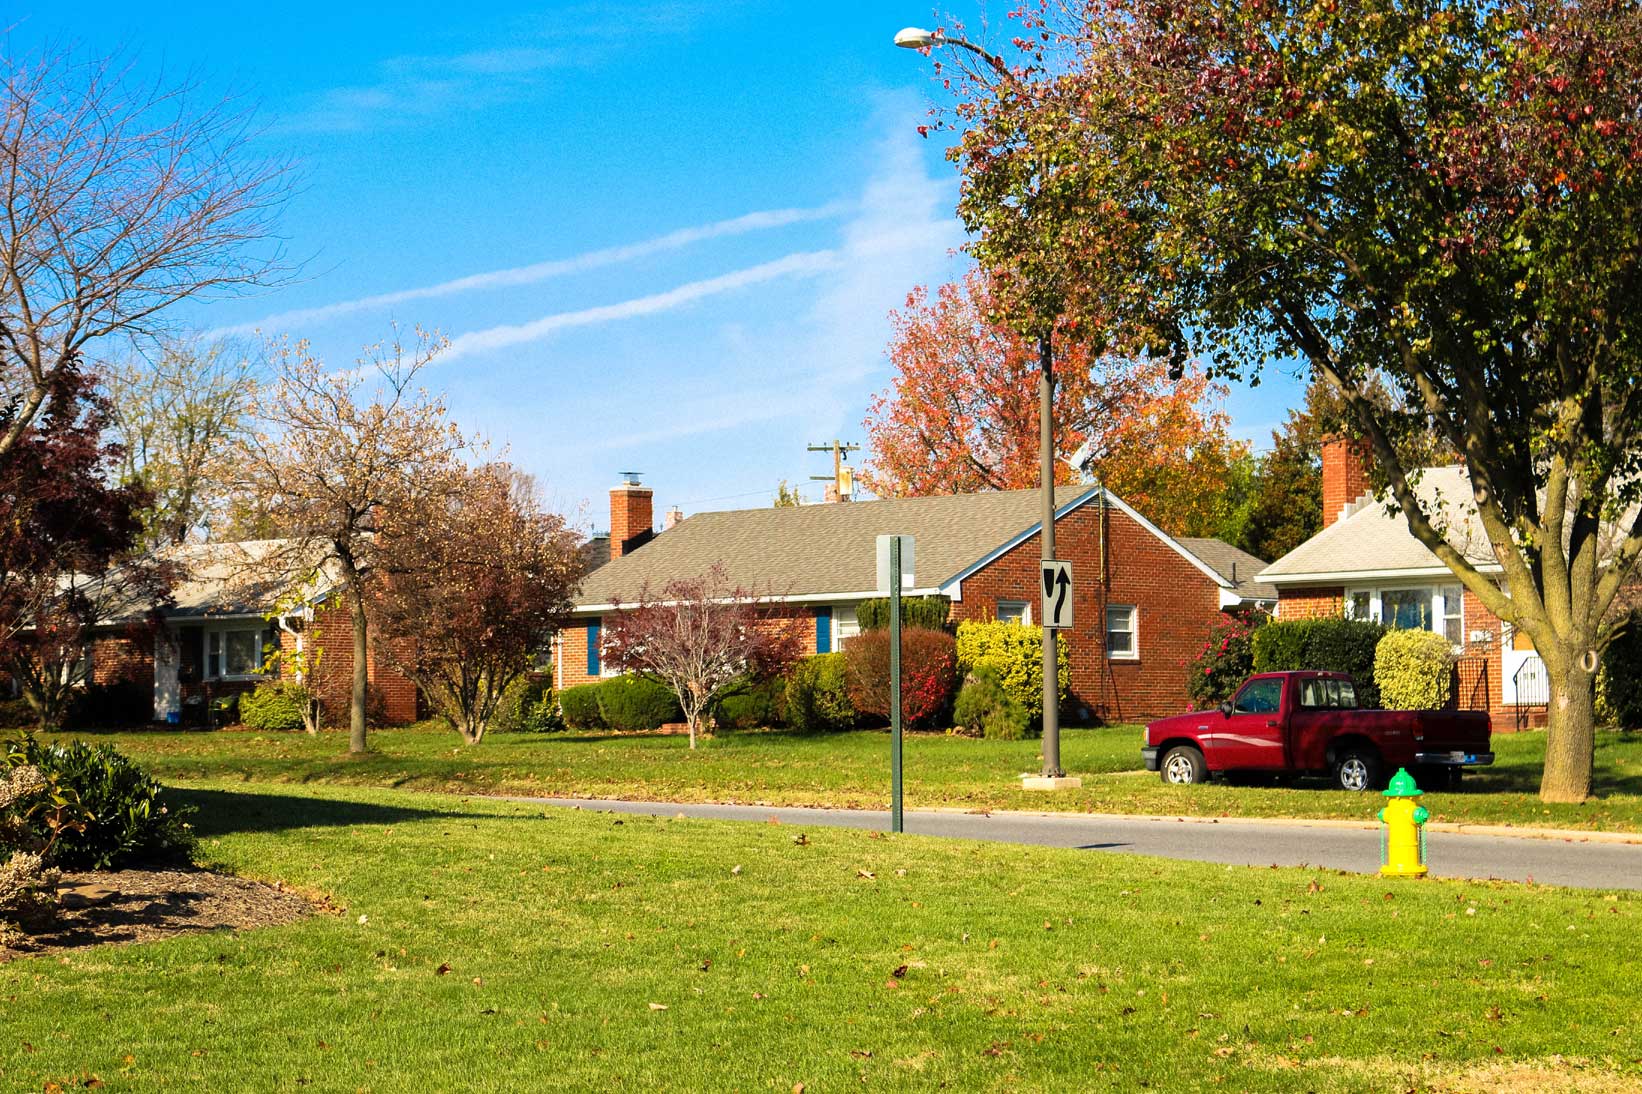 Residential neighborhood in Frederick, MD